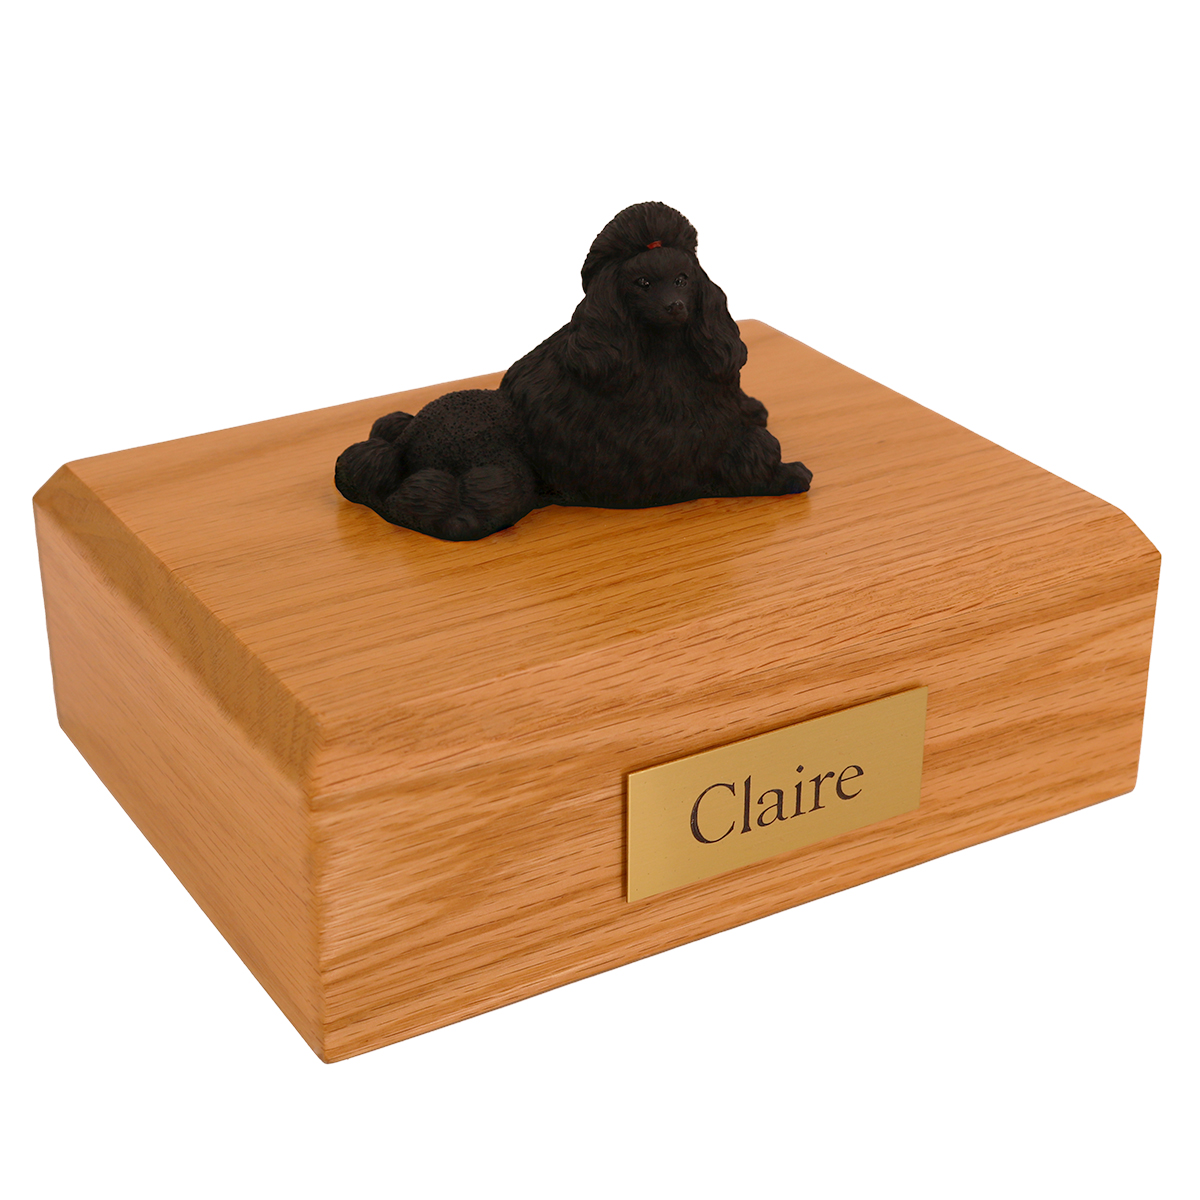 Dog, Poodle, Black - show cut - Figurine Urn